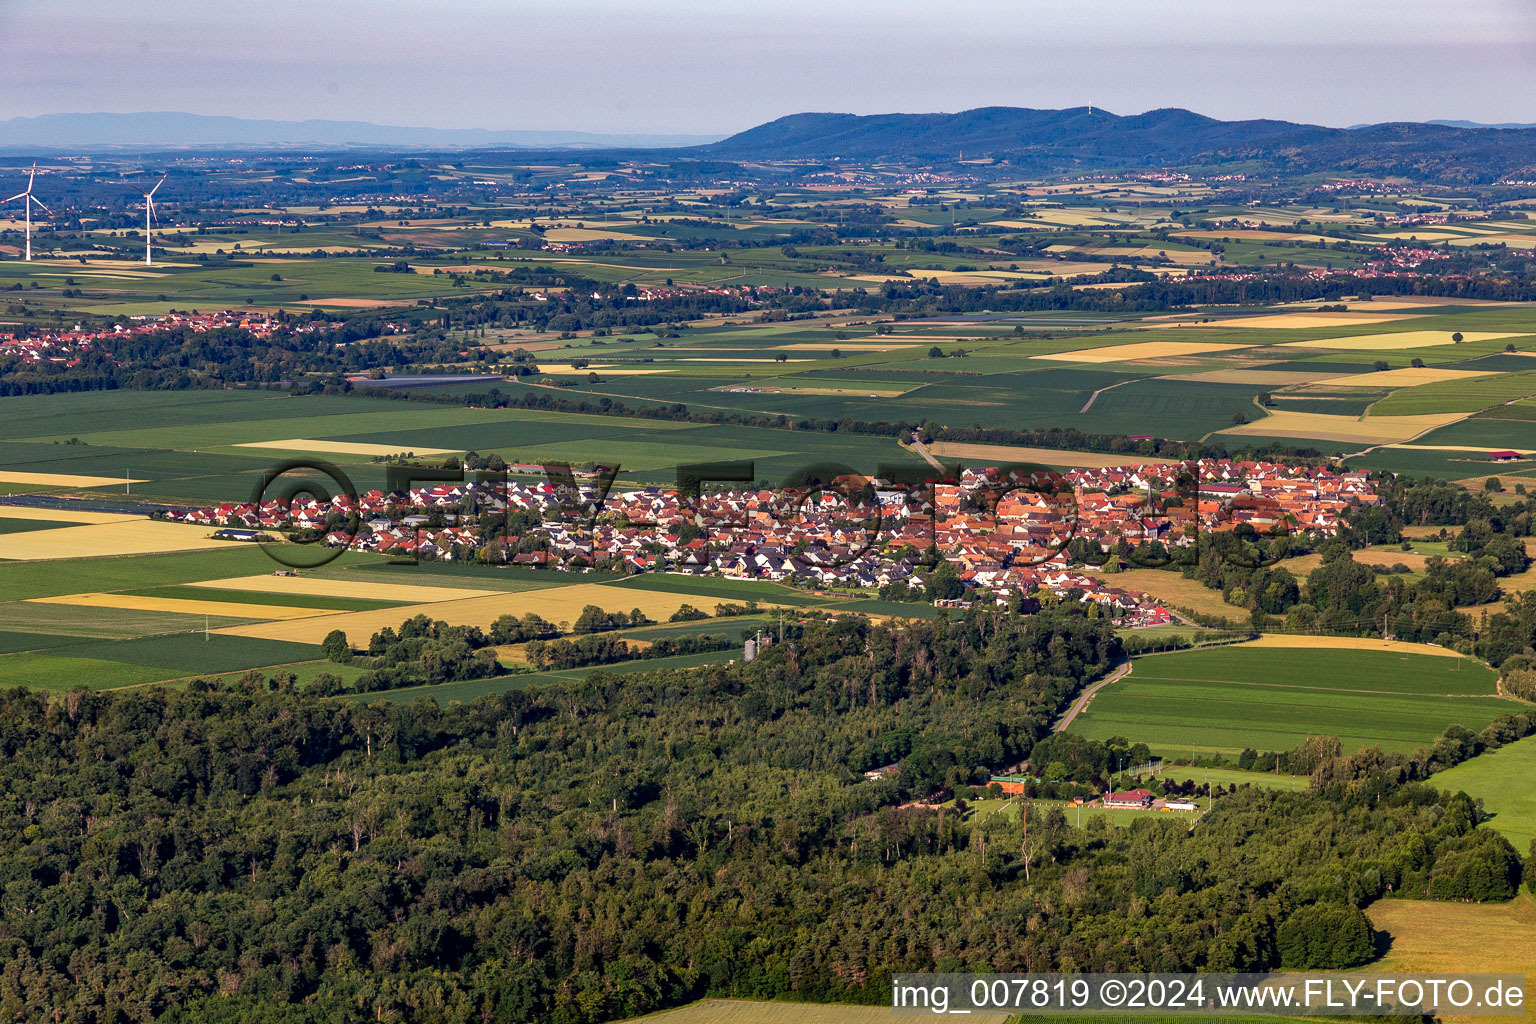 Village view in Steinweiler in the state Rhineland-Palatinate, Germany